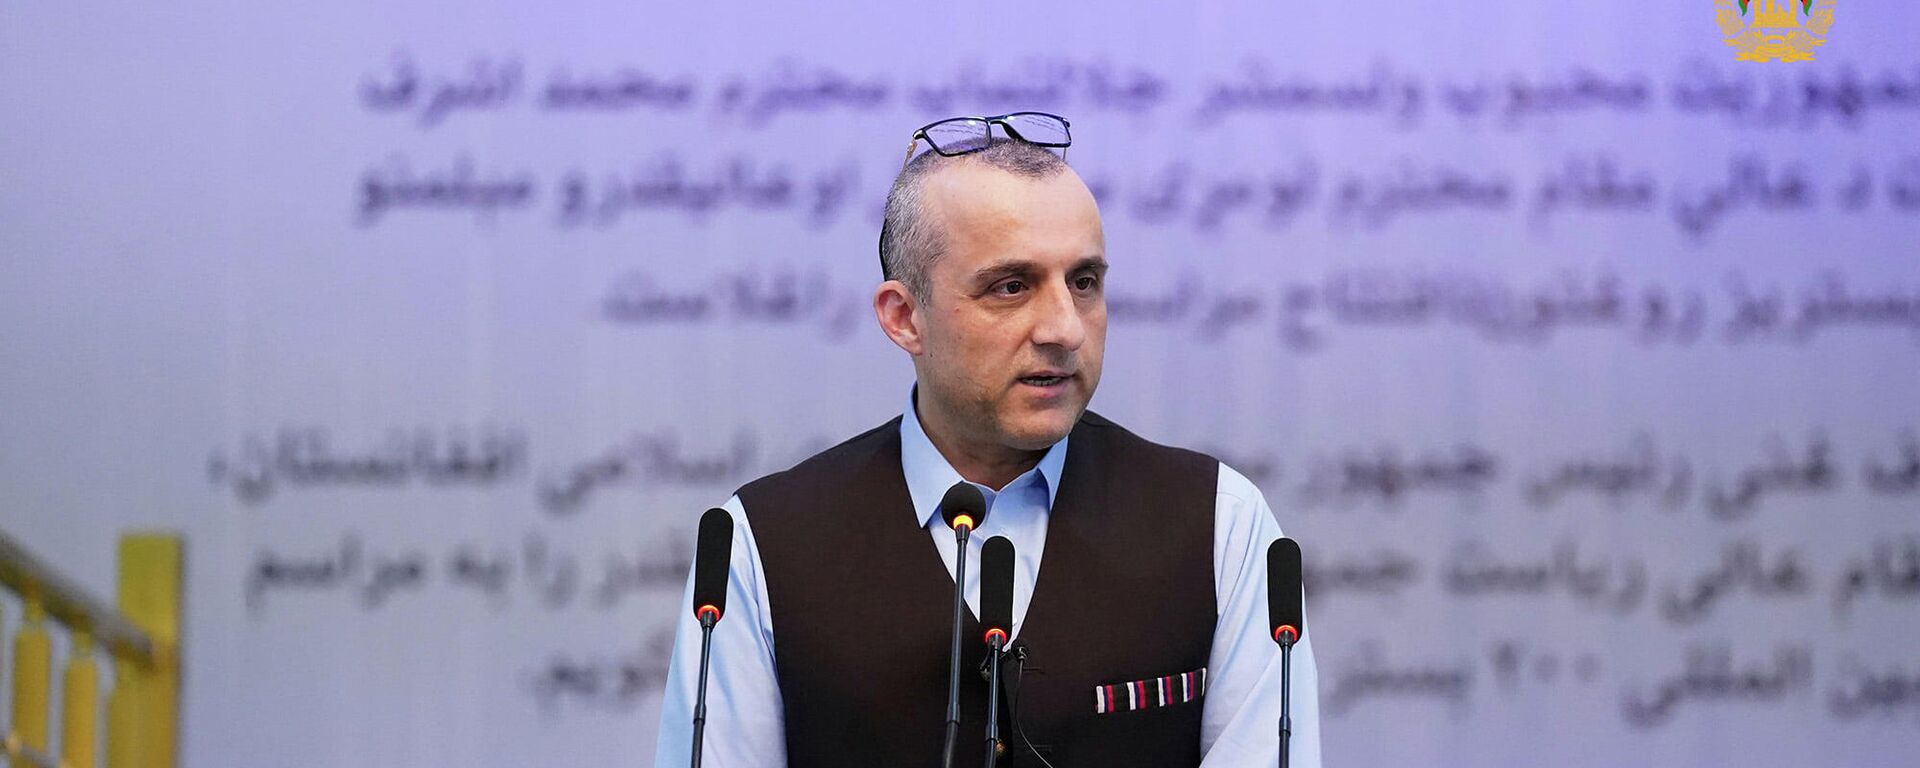 Амиршох Ноибзода, представитель Парламента от провинции Бадгис, Афганистан - Sputnik Таджикистан, 1920, 15.09.2021